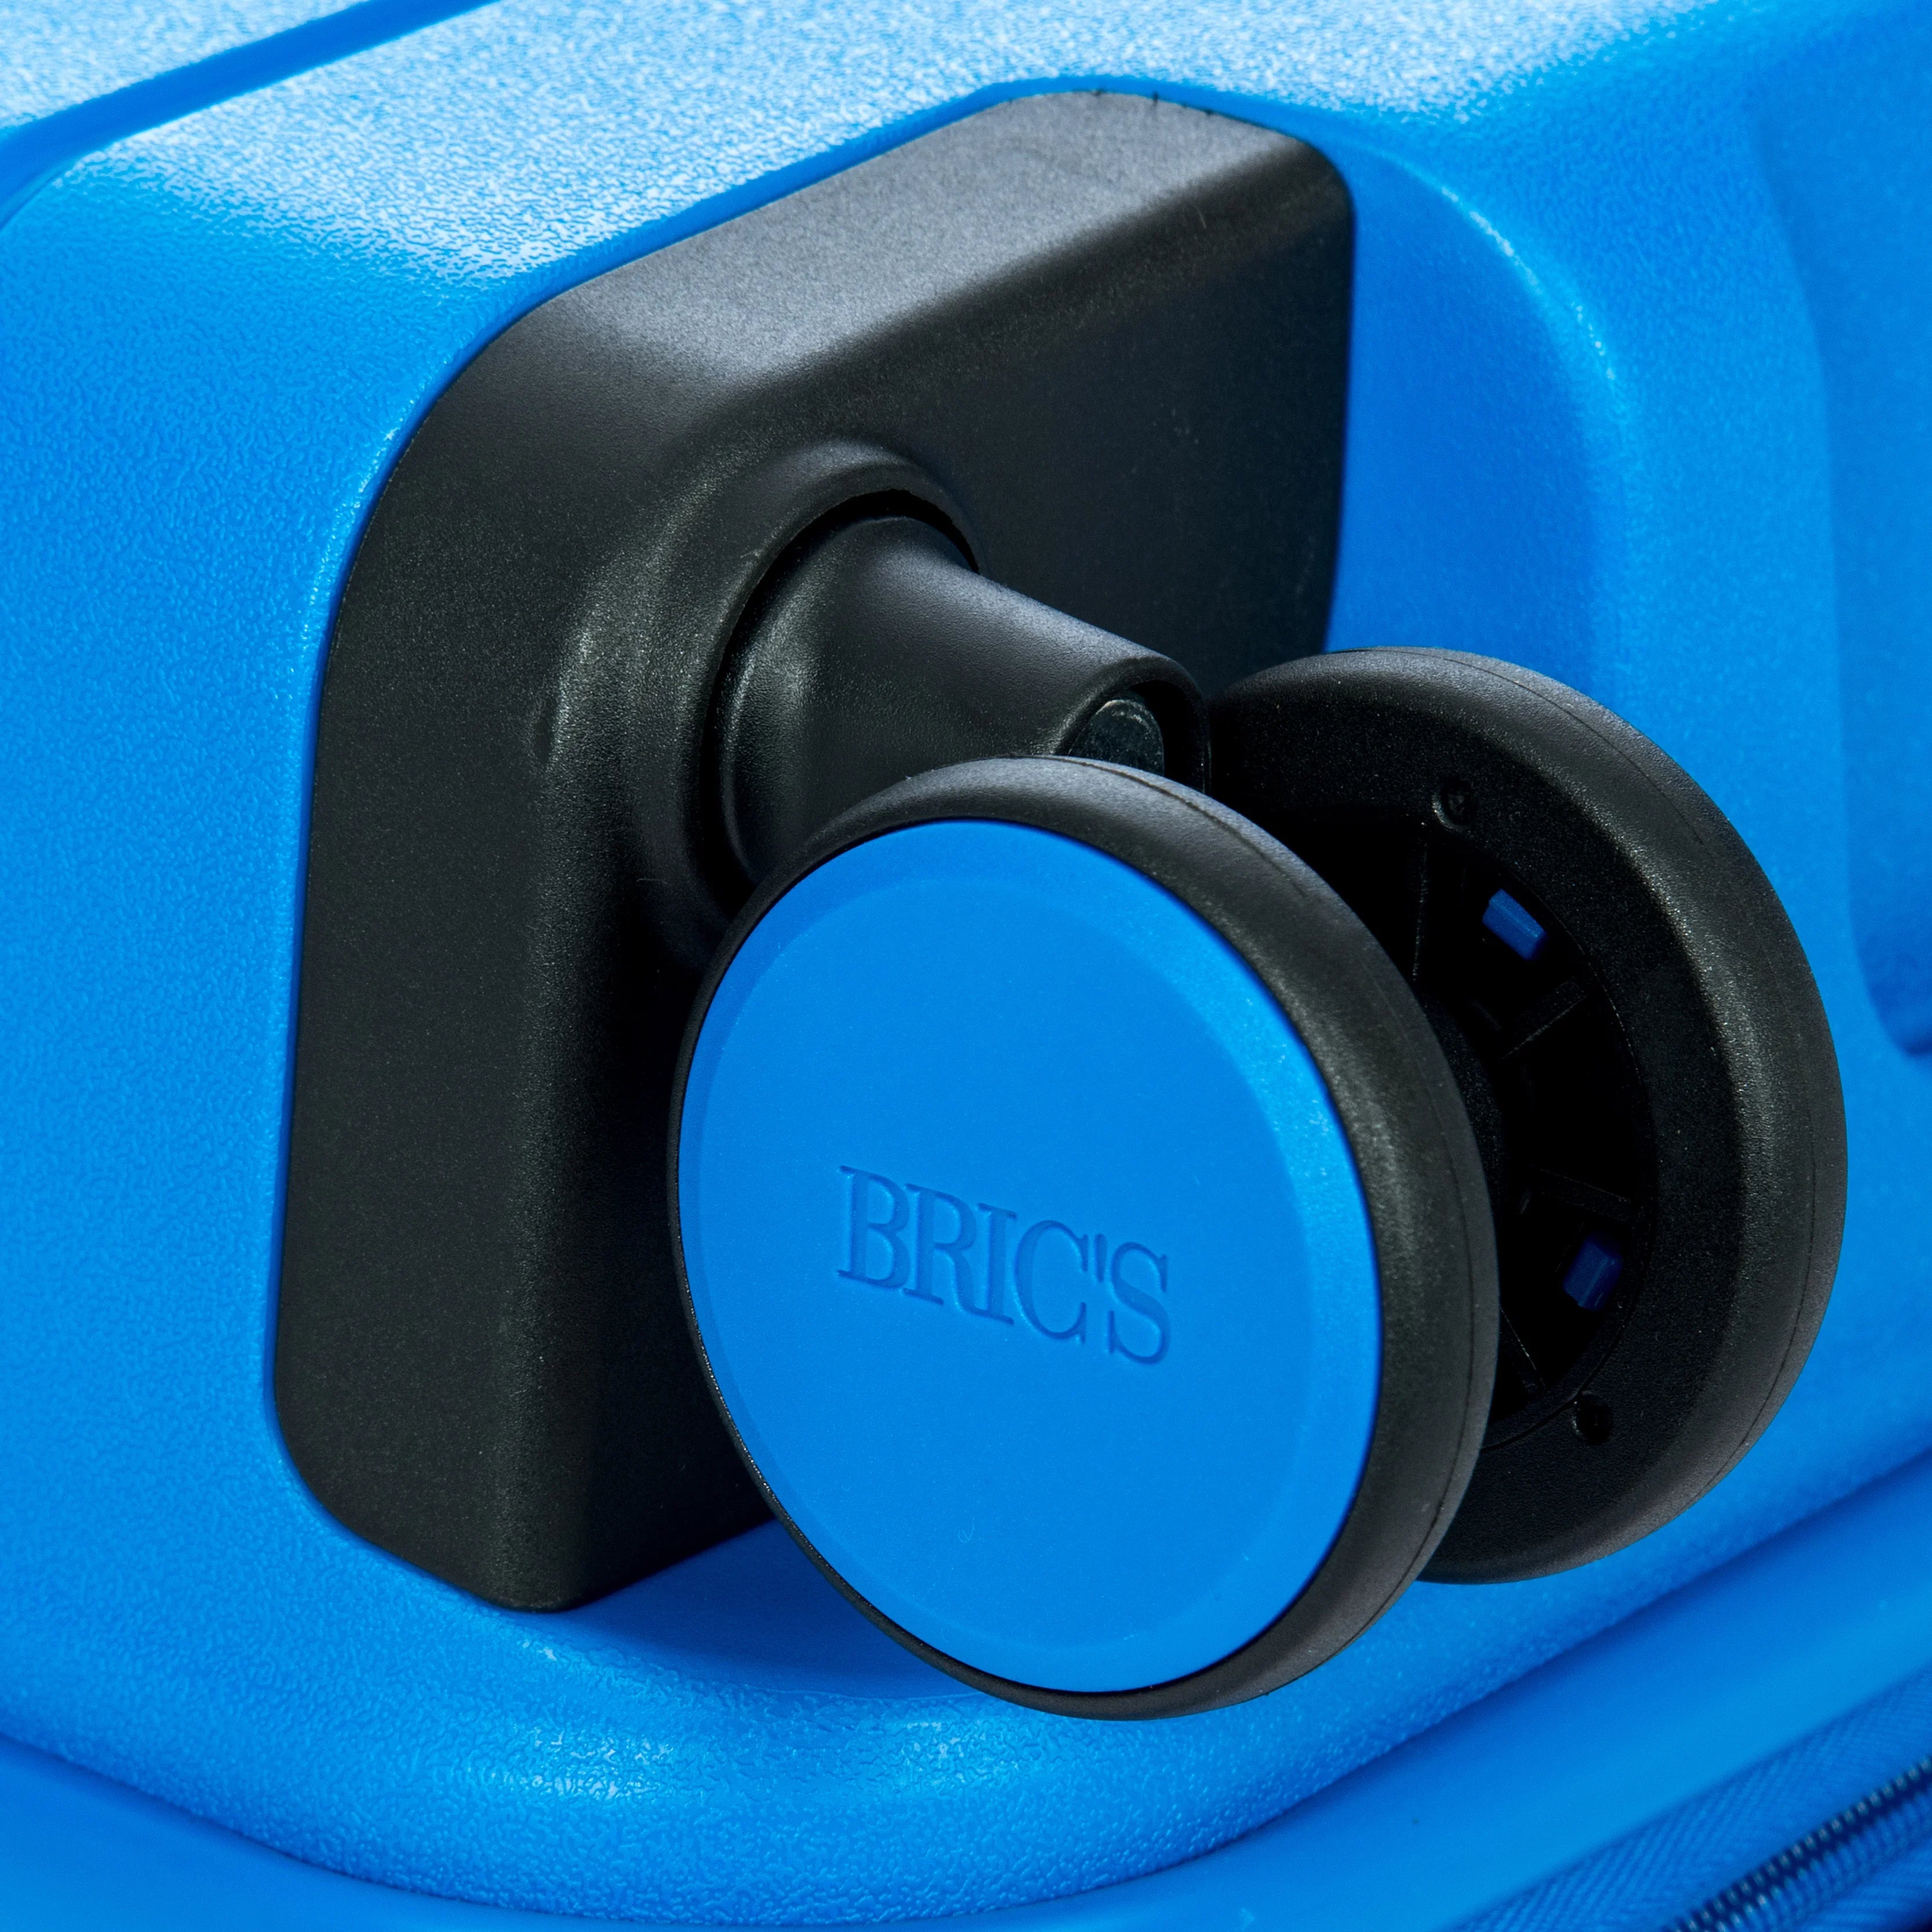 BY by Brics Ulisse 4-Rollen Trolley 65 cm - Electric Blue